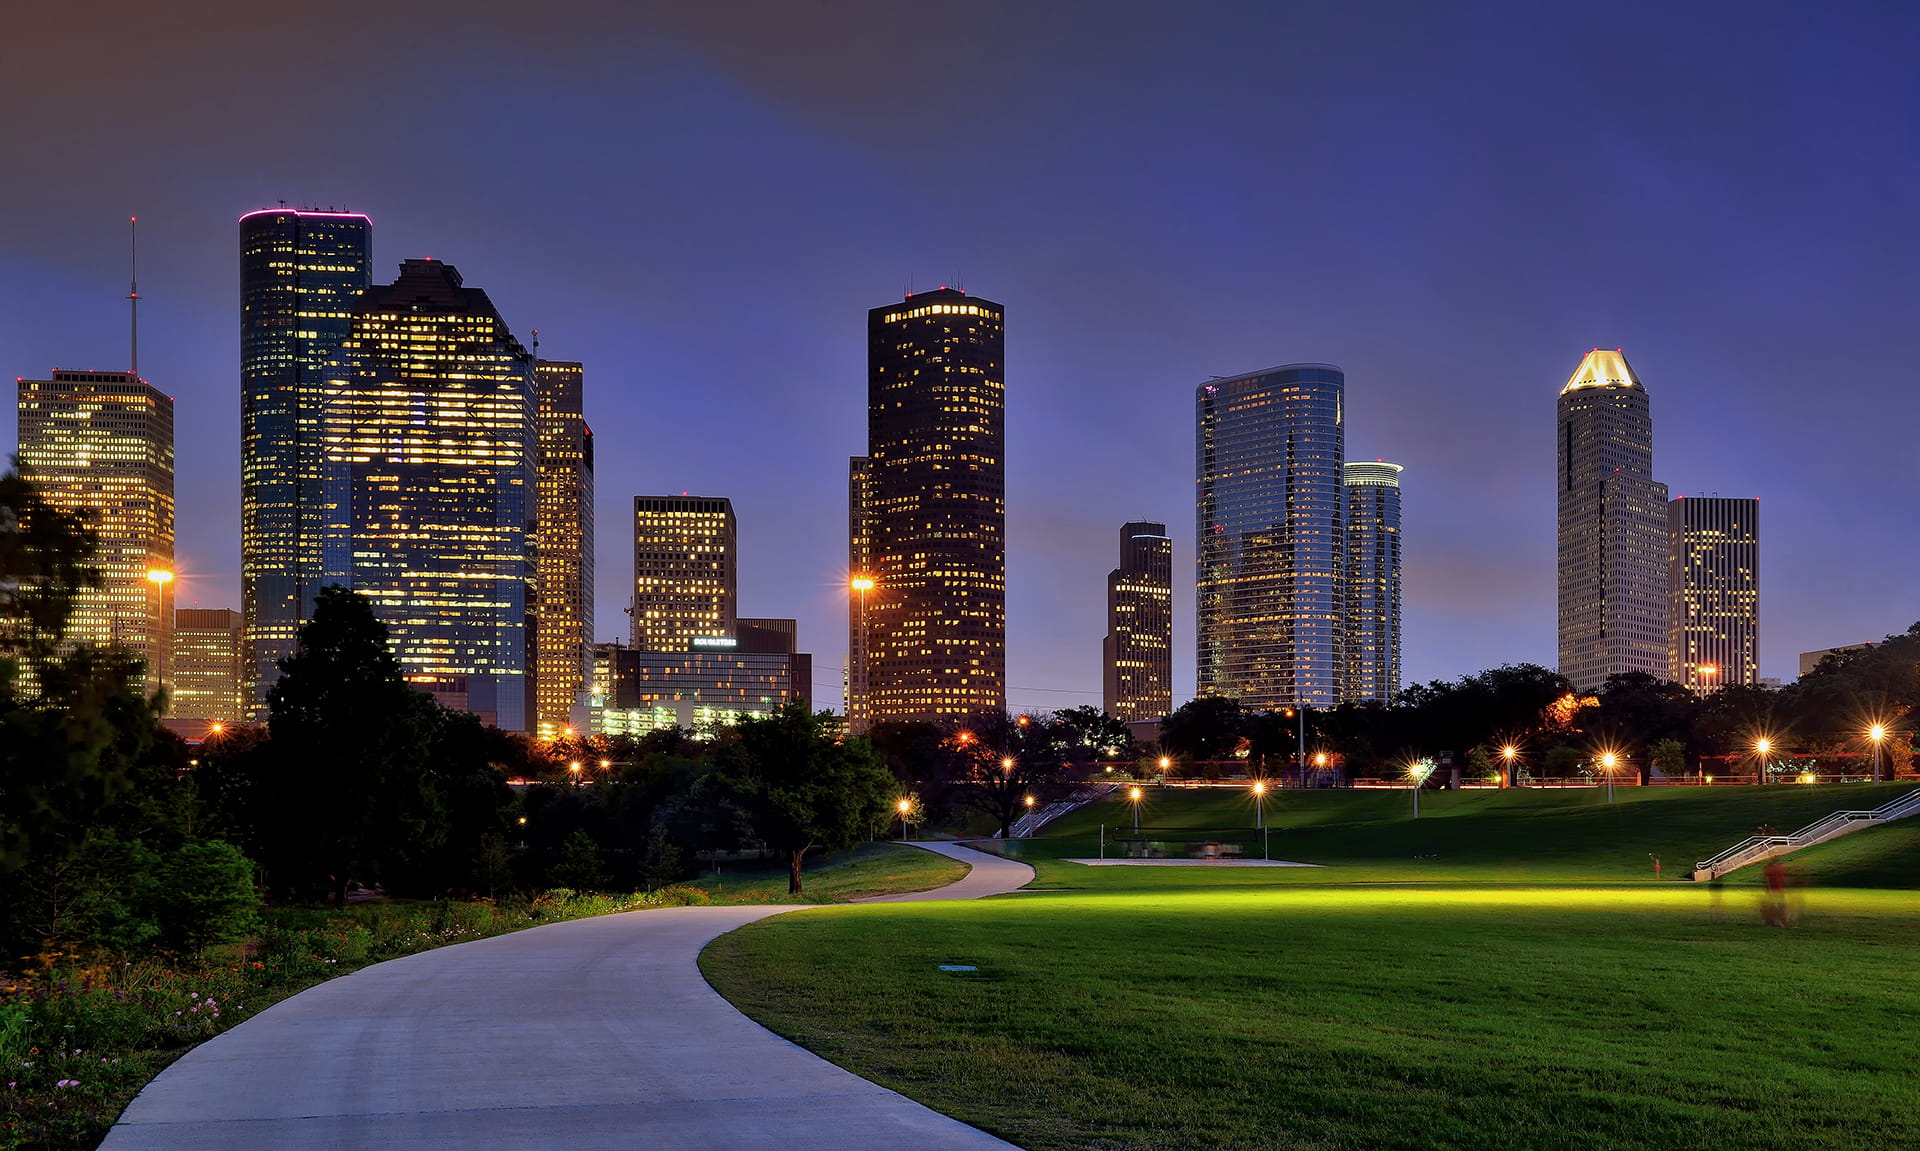 Houston Skyline from Park at Night